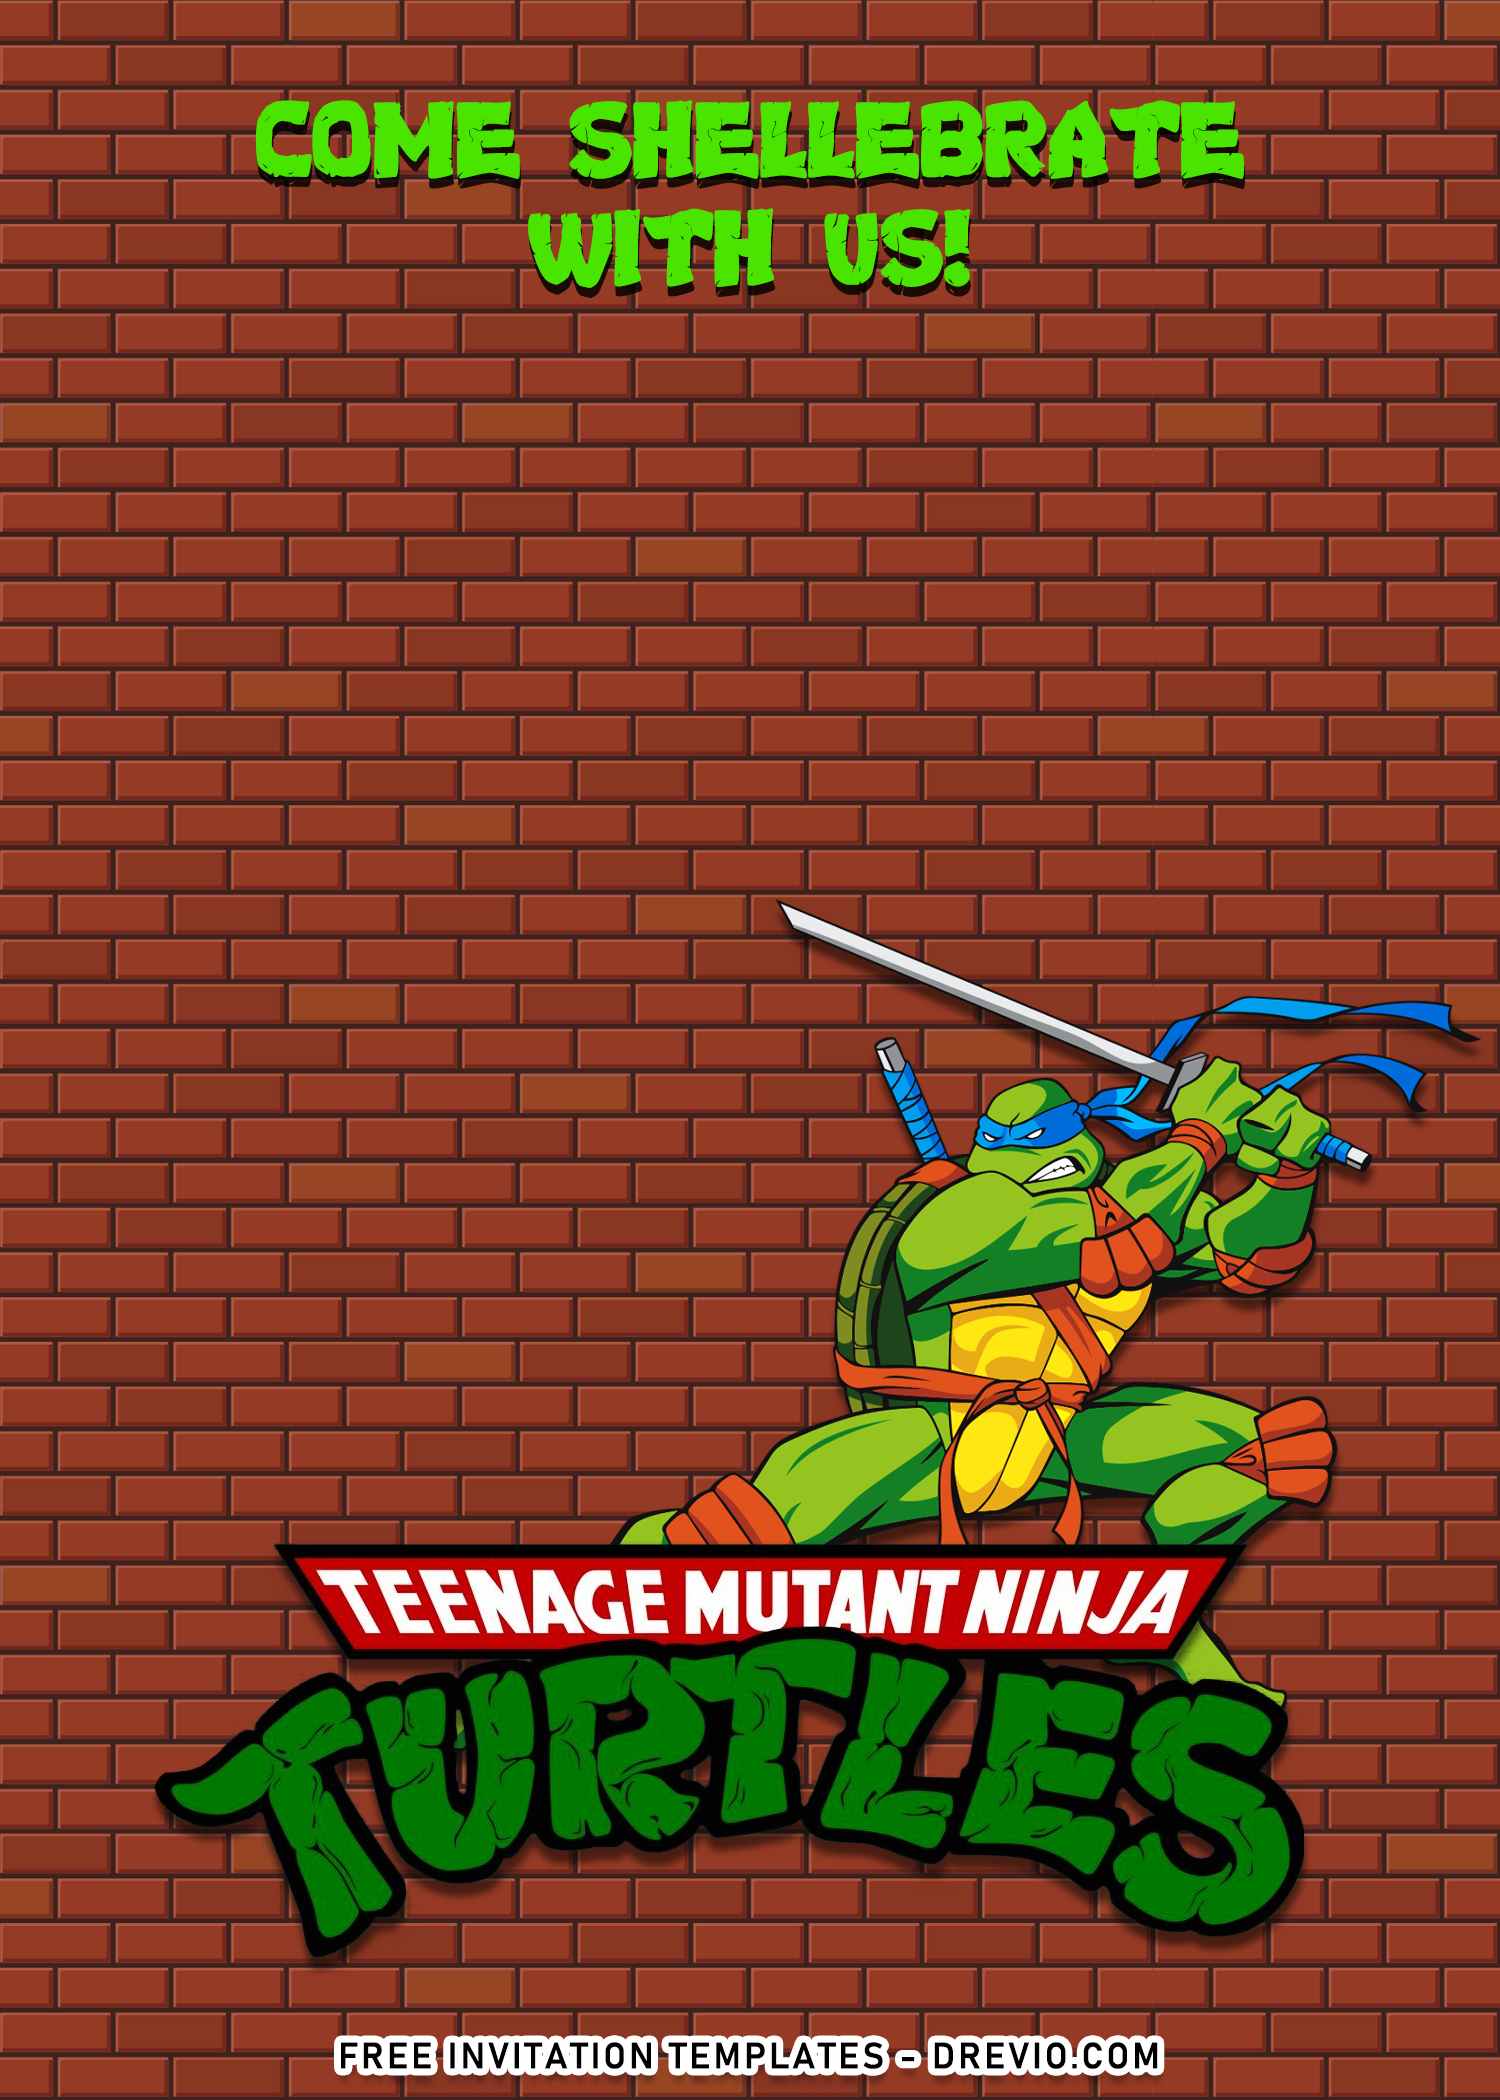 Ninja Turtles Personalized Birthday Invitations More Designs Inside! 